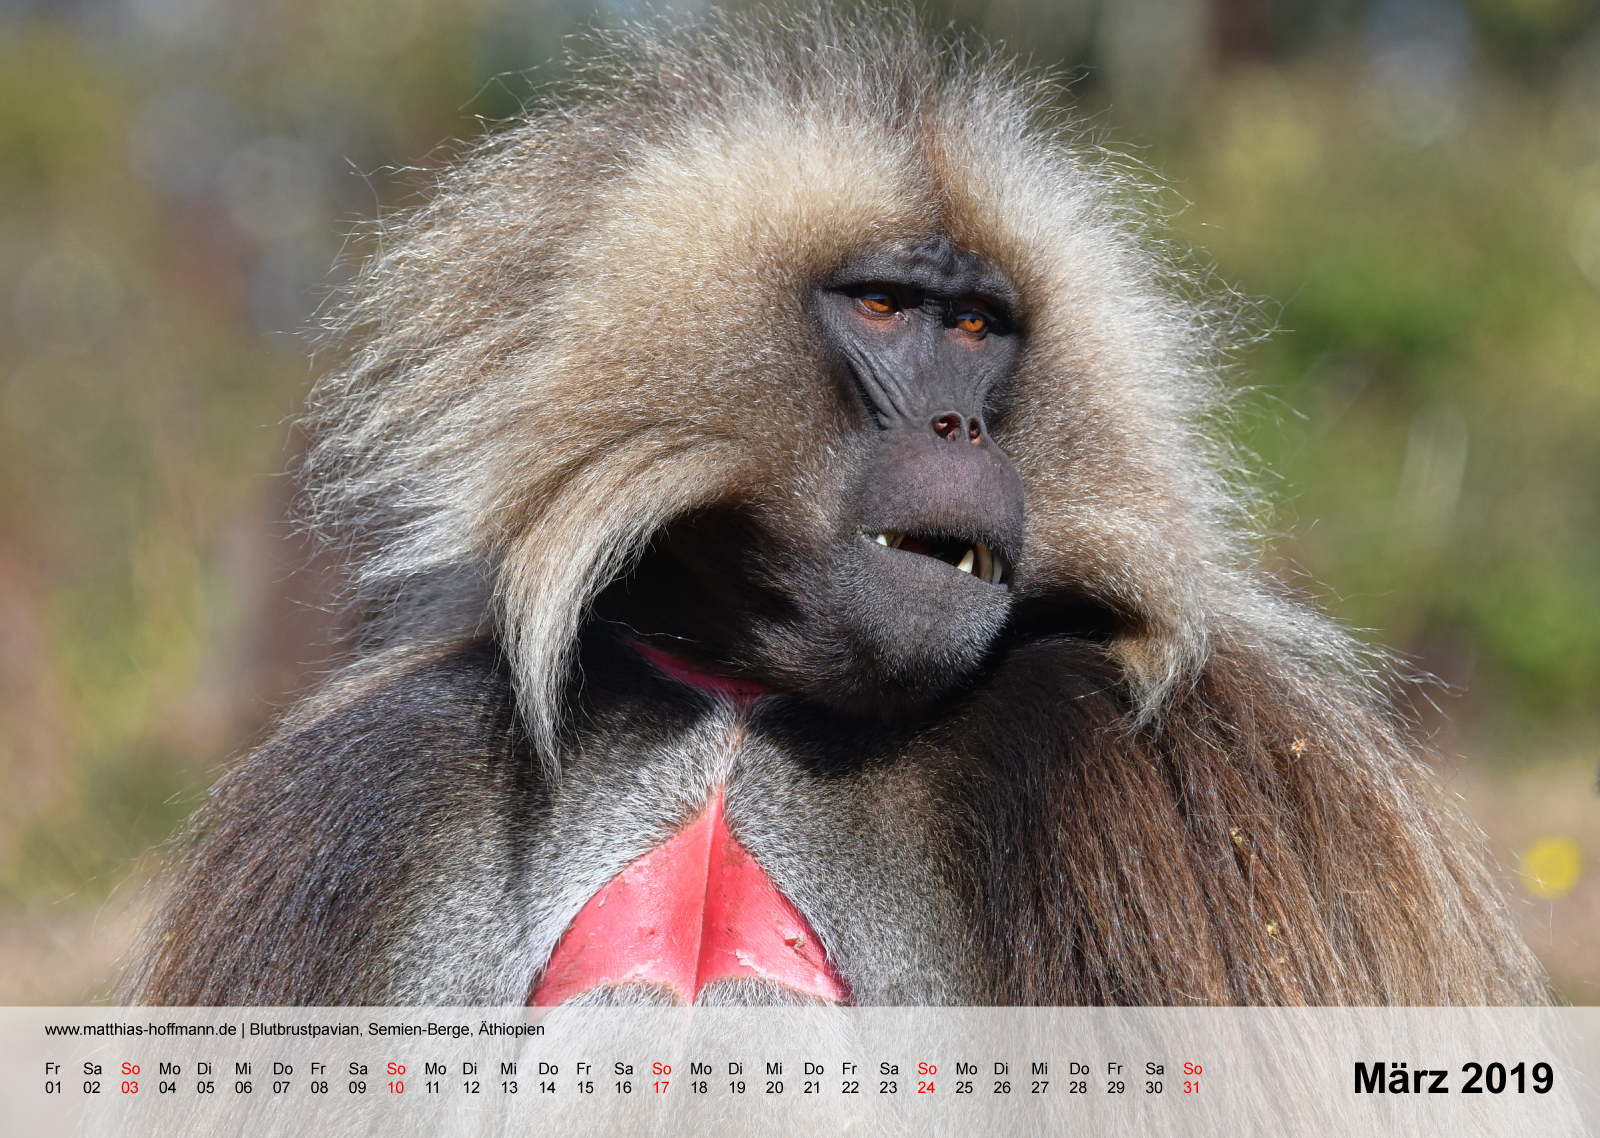 Blutbrustpavian, Semien-Berge, Äthiopien | Kalender 2019 - März